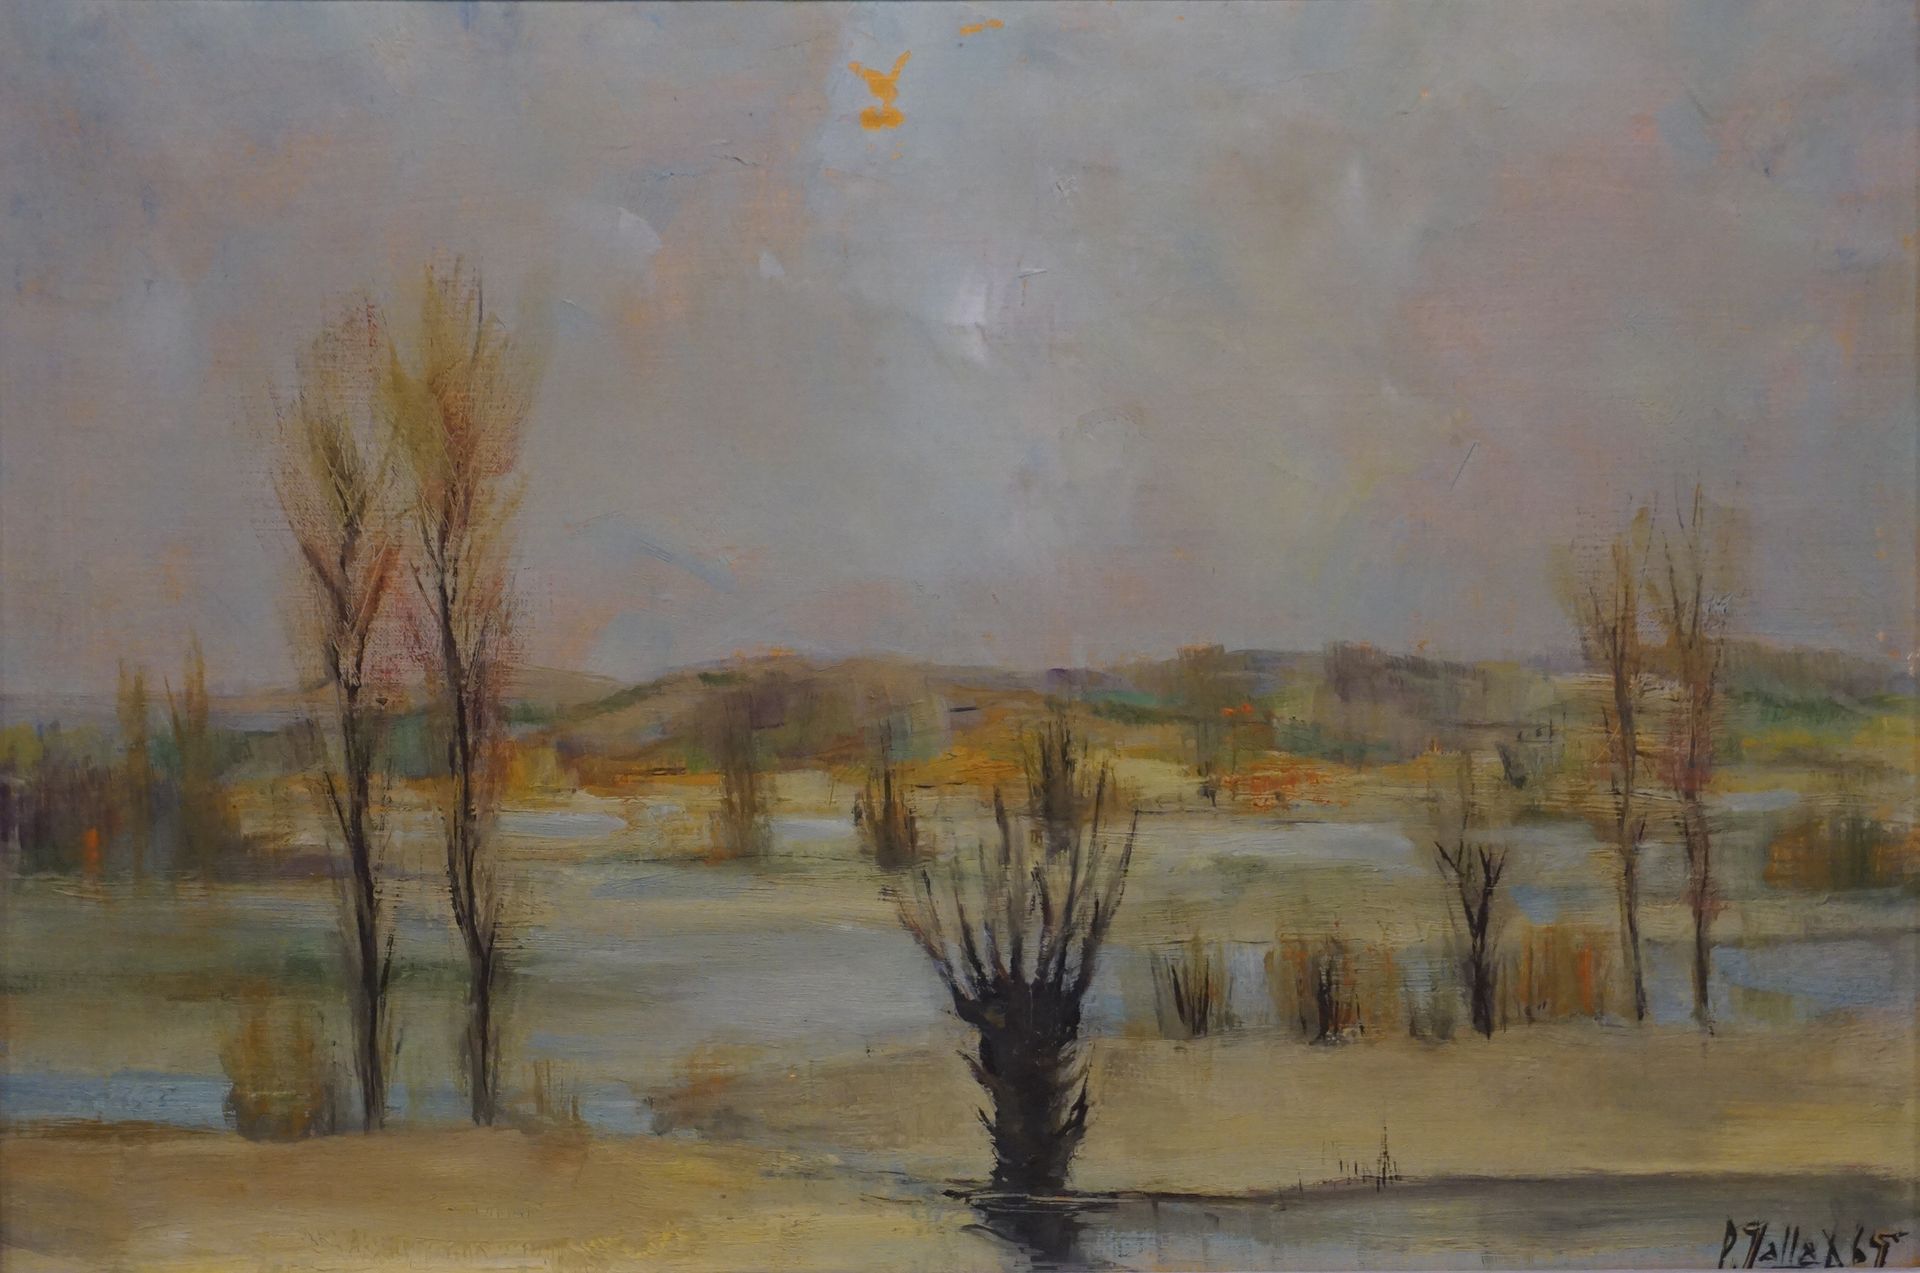 Paul JALLAT "风景"，布面油画，SBD，1969 年（小标记）。24x35 厘米